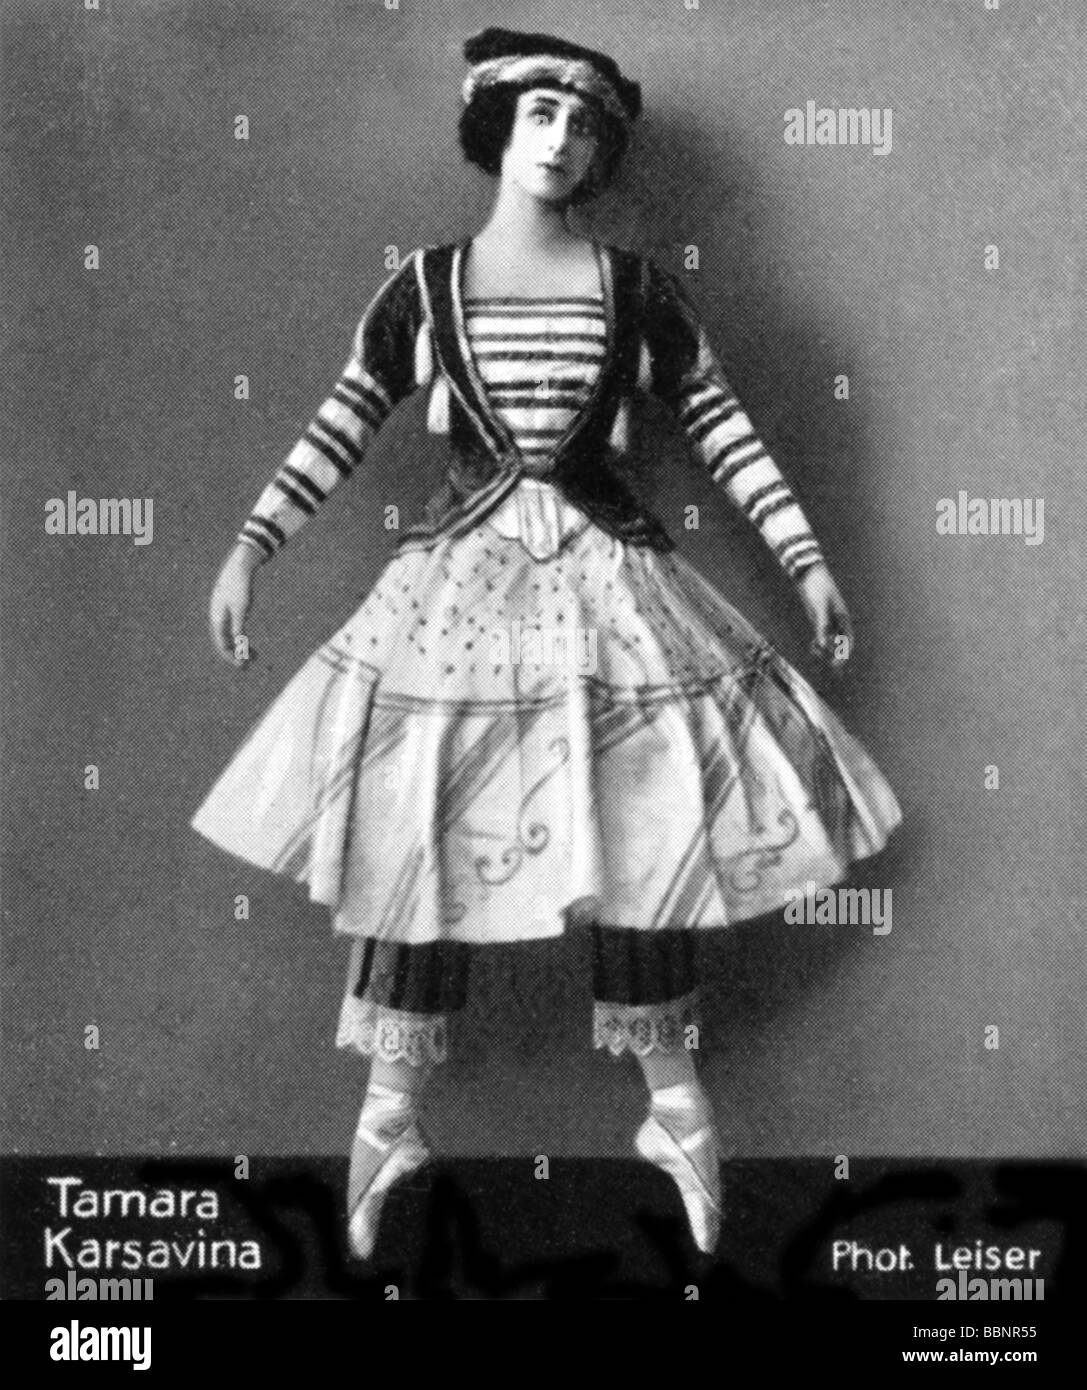 Karsavina, Tamara, 10.3.1885 - 9.3.1885, English dancer of Russian origin, full length in costume, circa 1910, Stock Photo